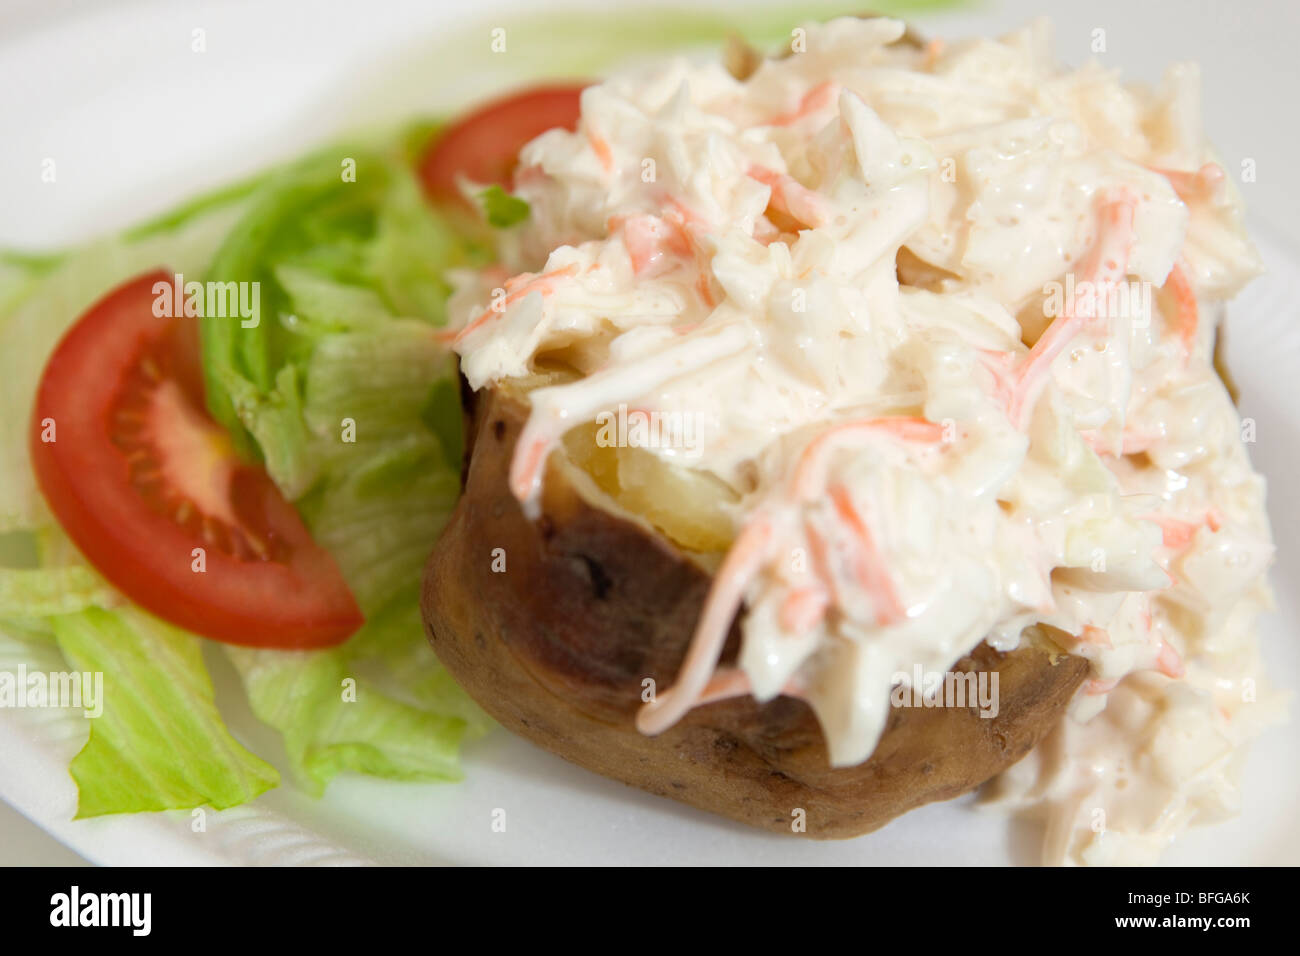 Coleslaw filling on Jacket Potato with Salad Garnish Stock Photo